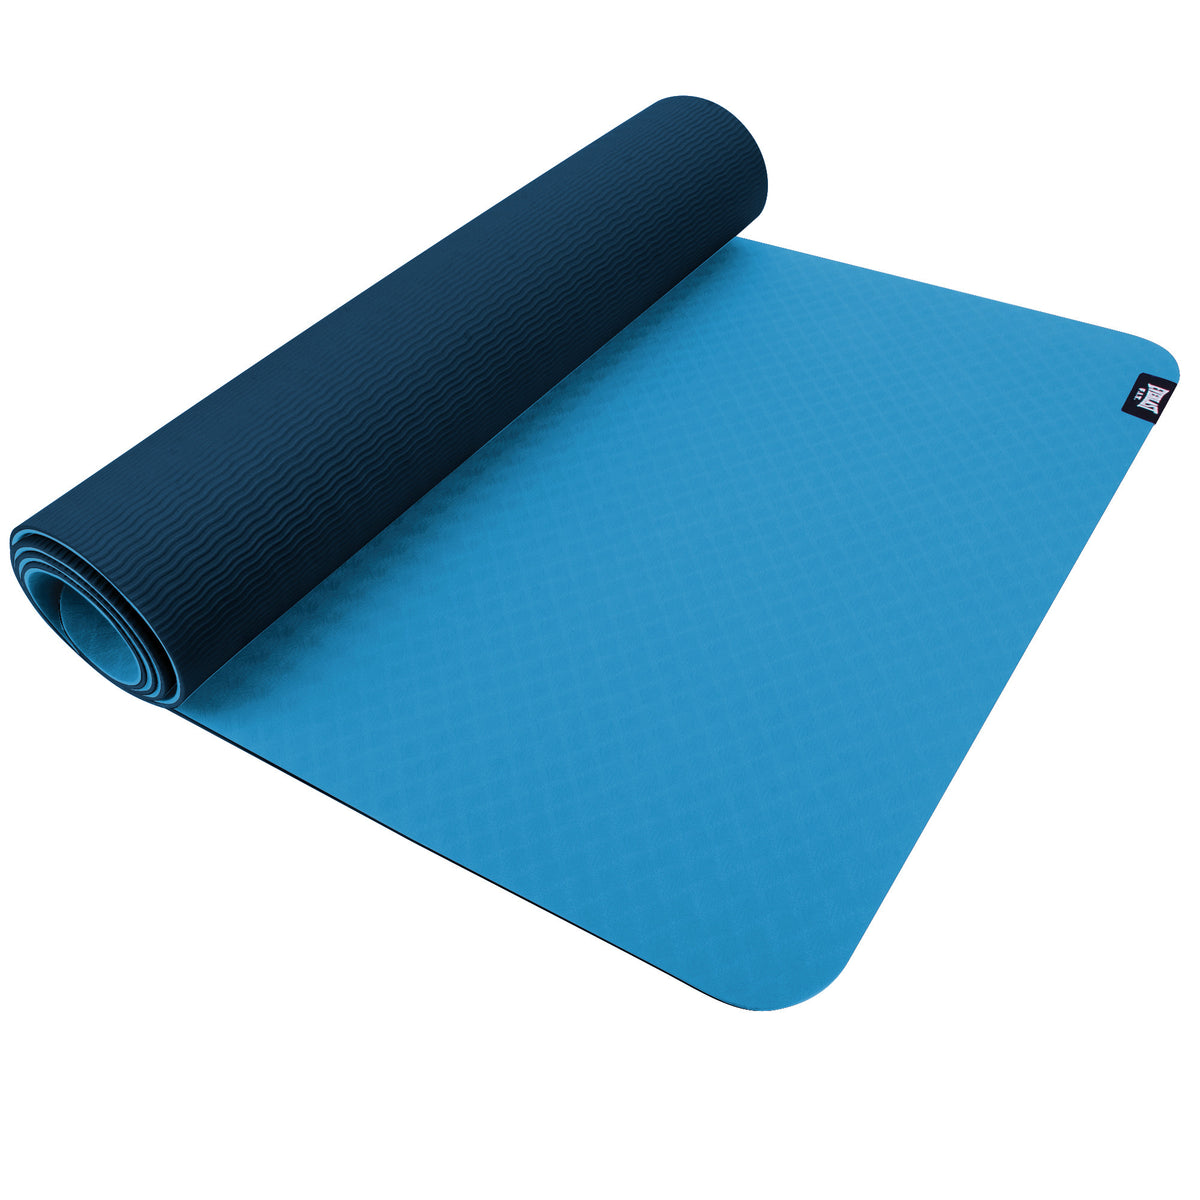 Large Yoga Mat Eco Friendly 6mm Thickness Non Slip - Blackish/Green